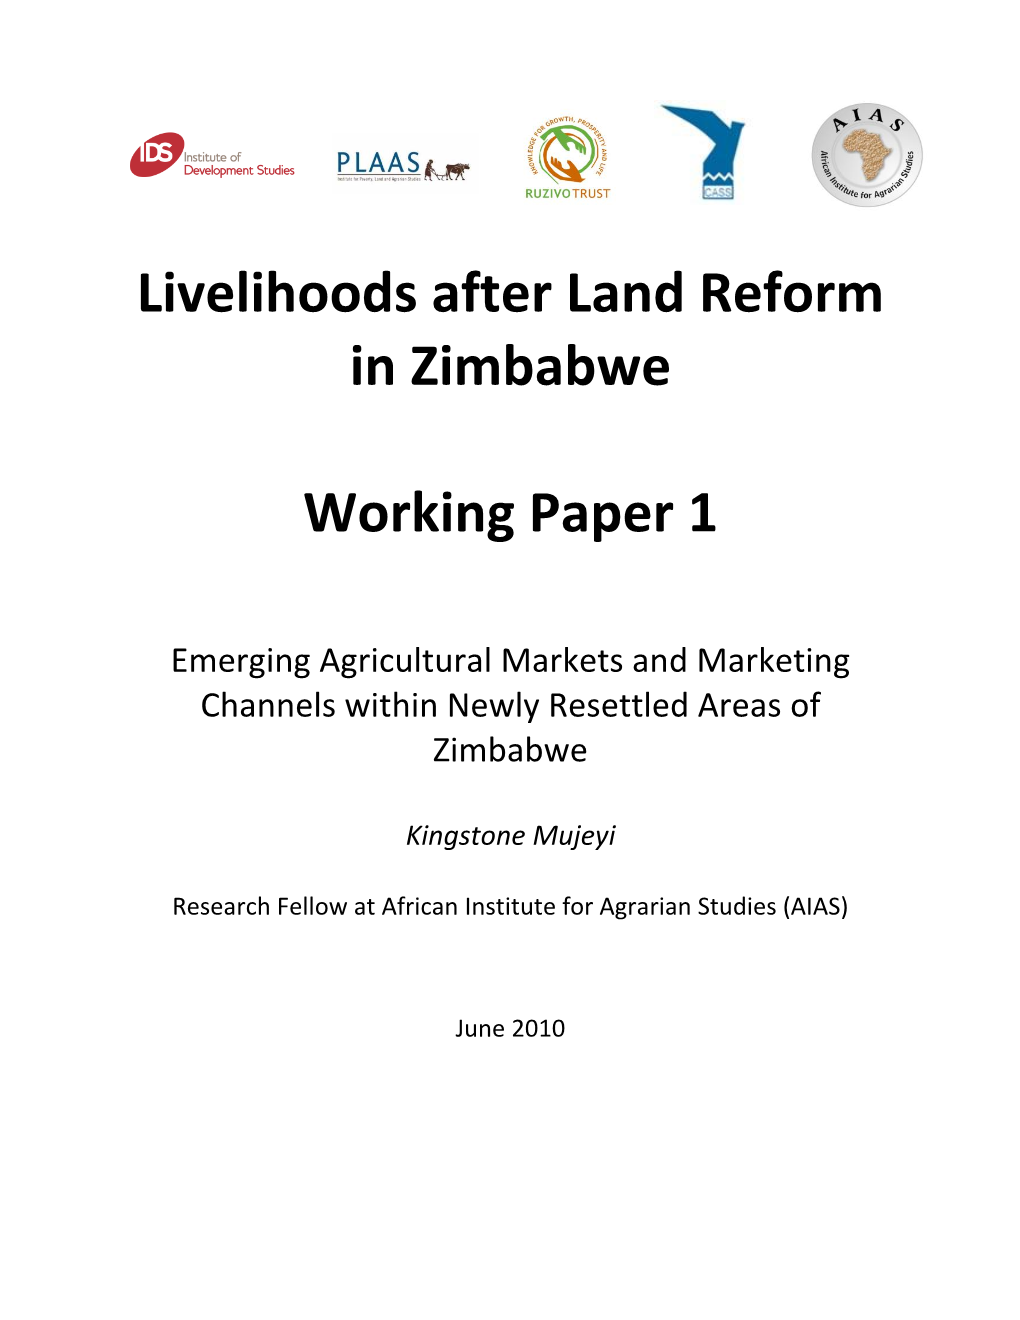 Livelihoods After Land Reform in Zimbabwe Working Paper 1